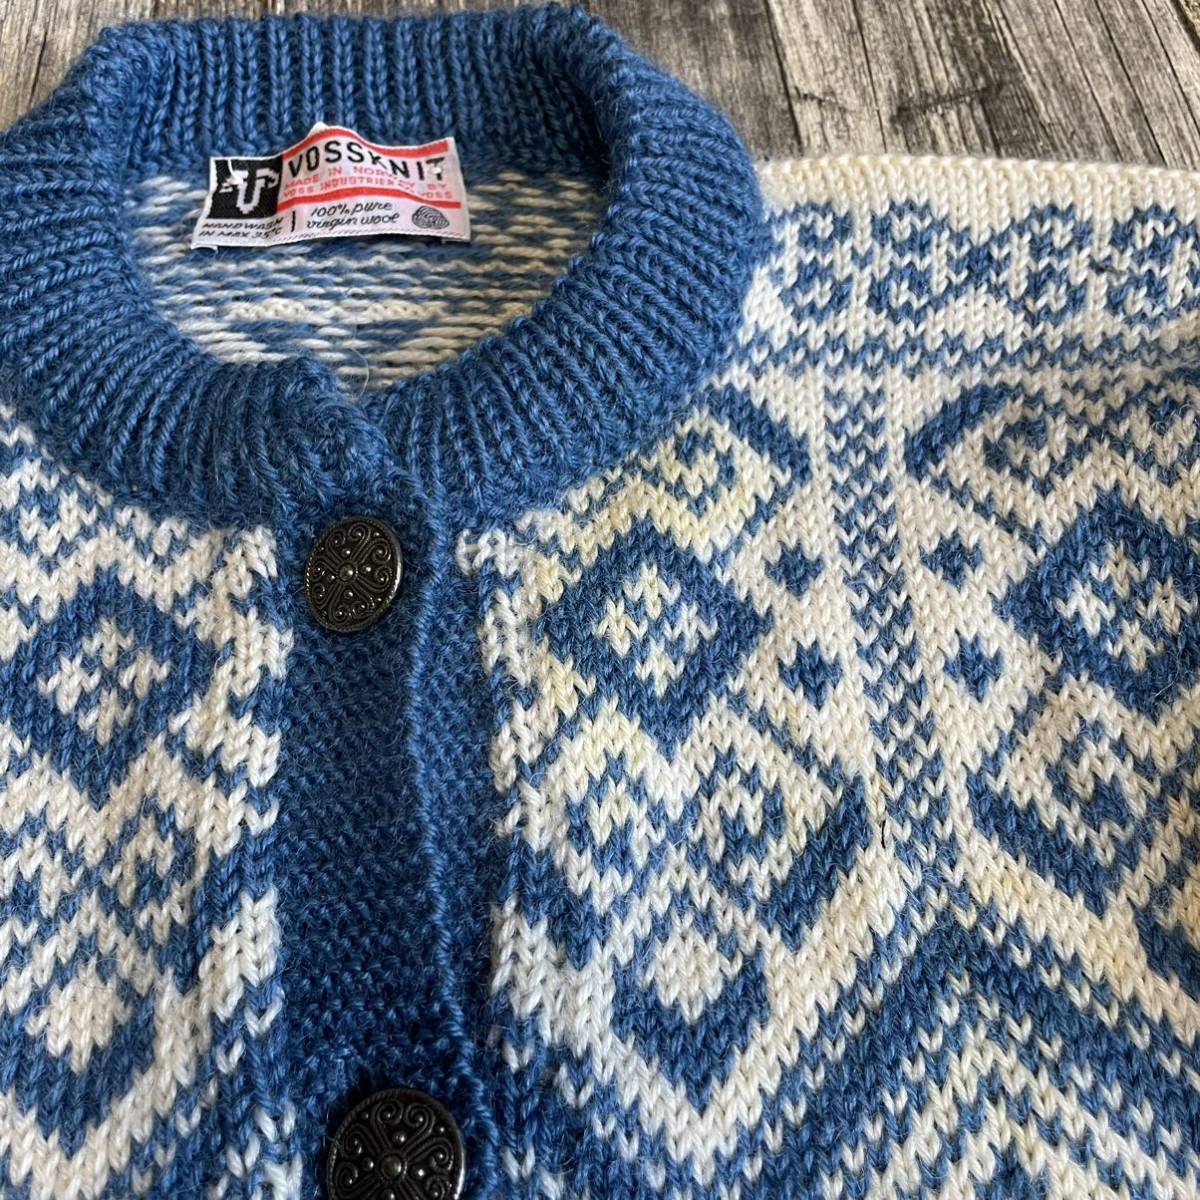  free shipping noru way made nordic cardigan nordic sweater 